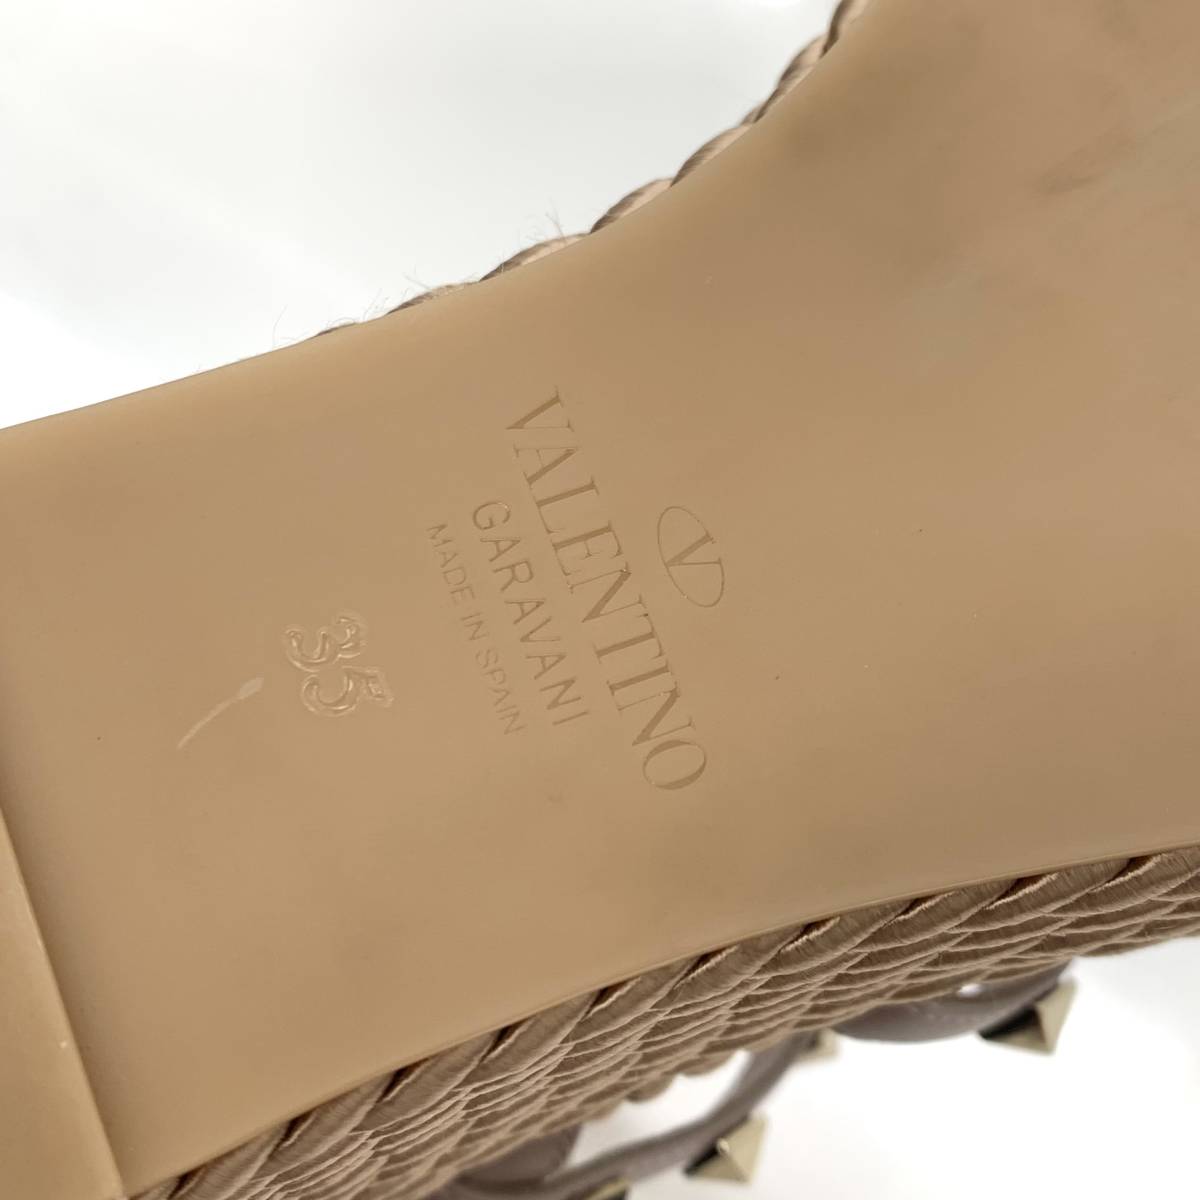 7190 Valentino lock studs leather Wedge sole sandals pink beige 